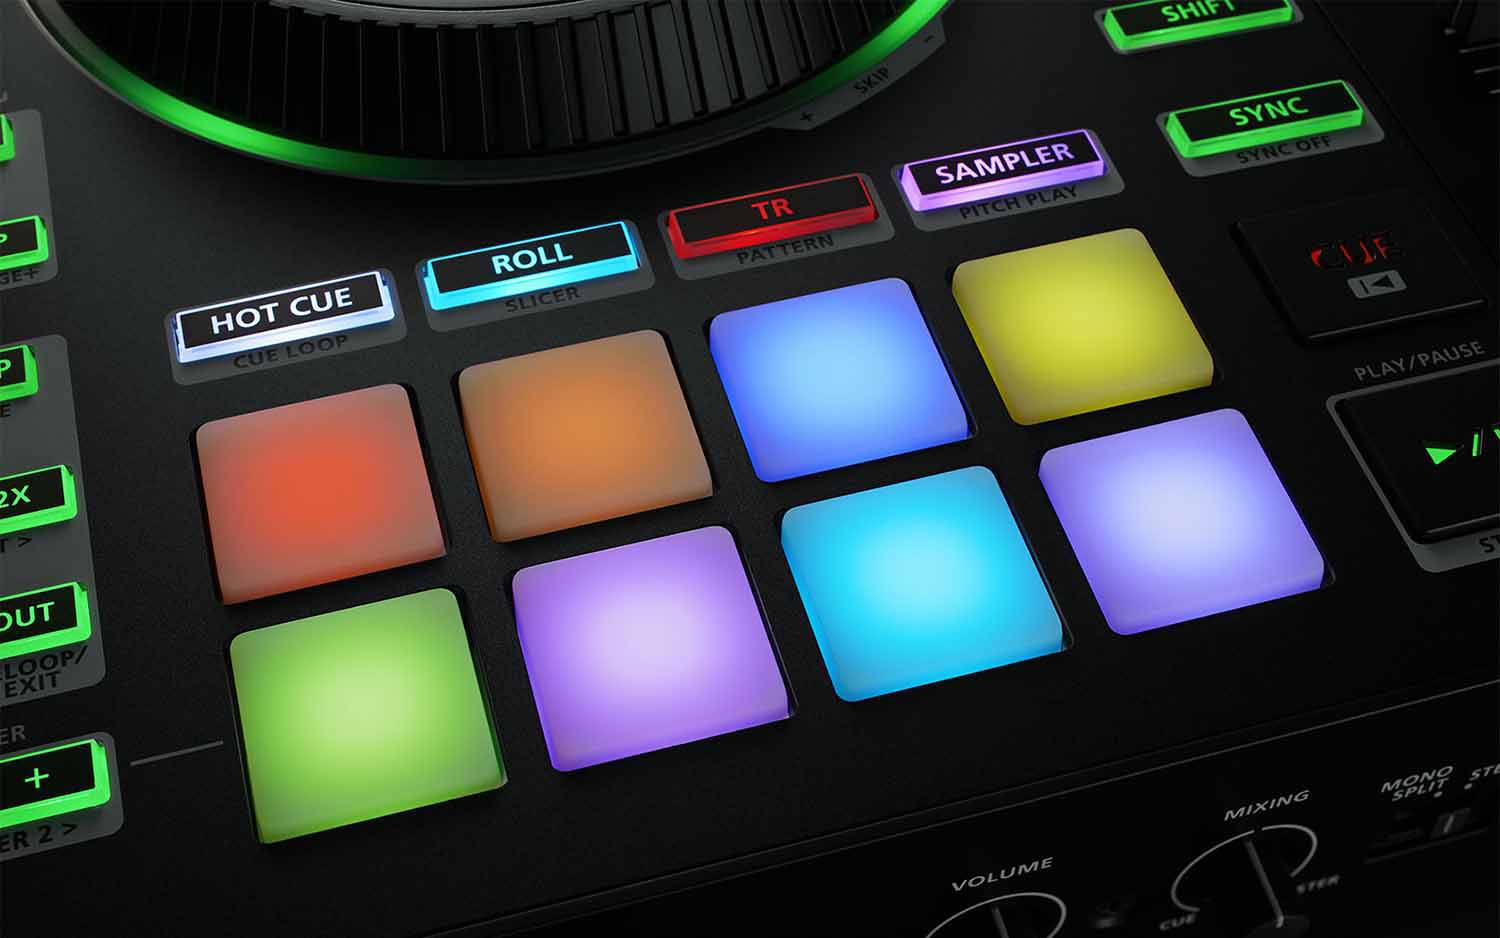 Roland DJ-808, 4 Channel DJ Controller for Serato DJ - Hollywood DJ